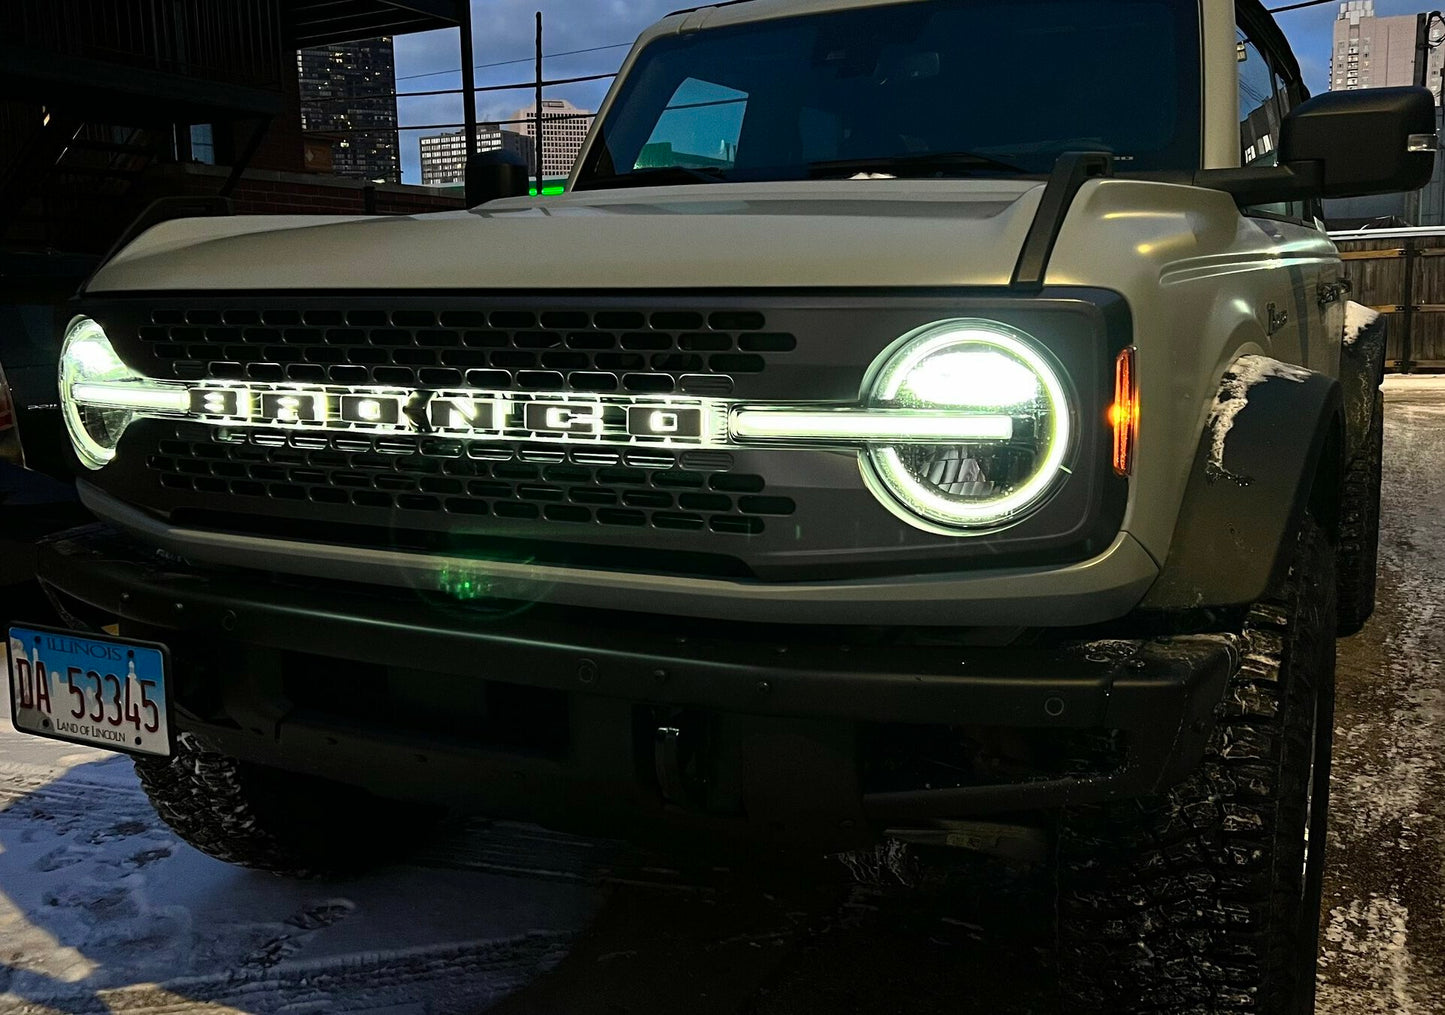 ORACLE Lighting 3140-Q-001 Fits 2021-2023 Ford Bronco Universal Illuminated LED Letter Badges - Matte White Surface Finish - Q